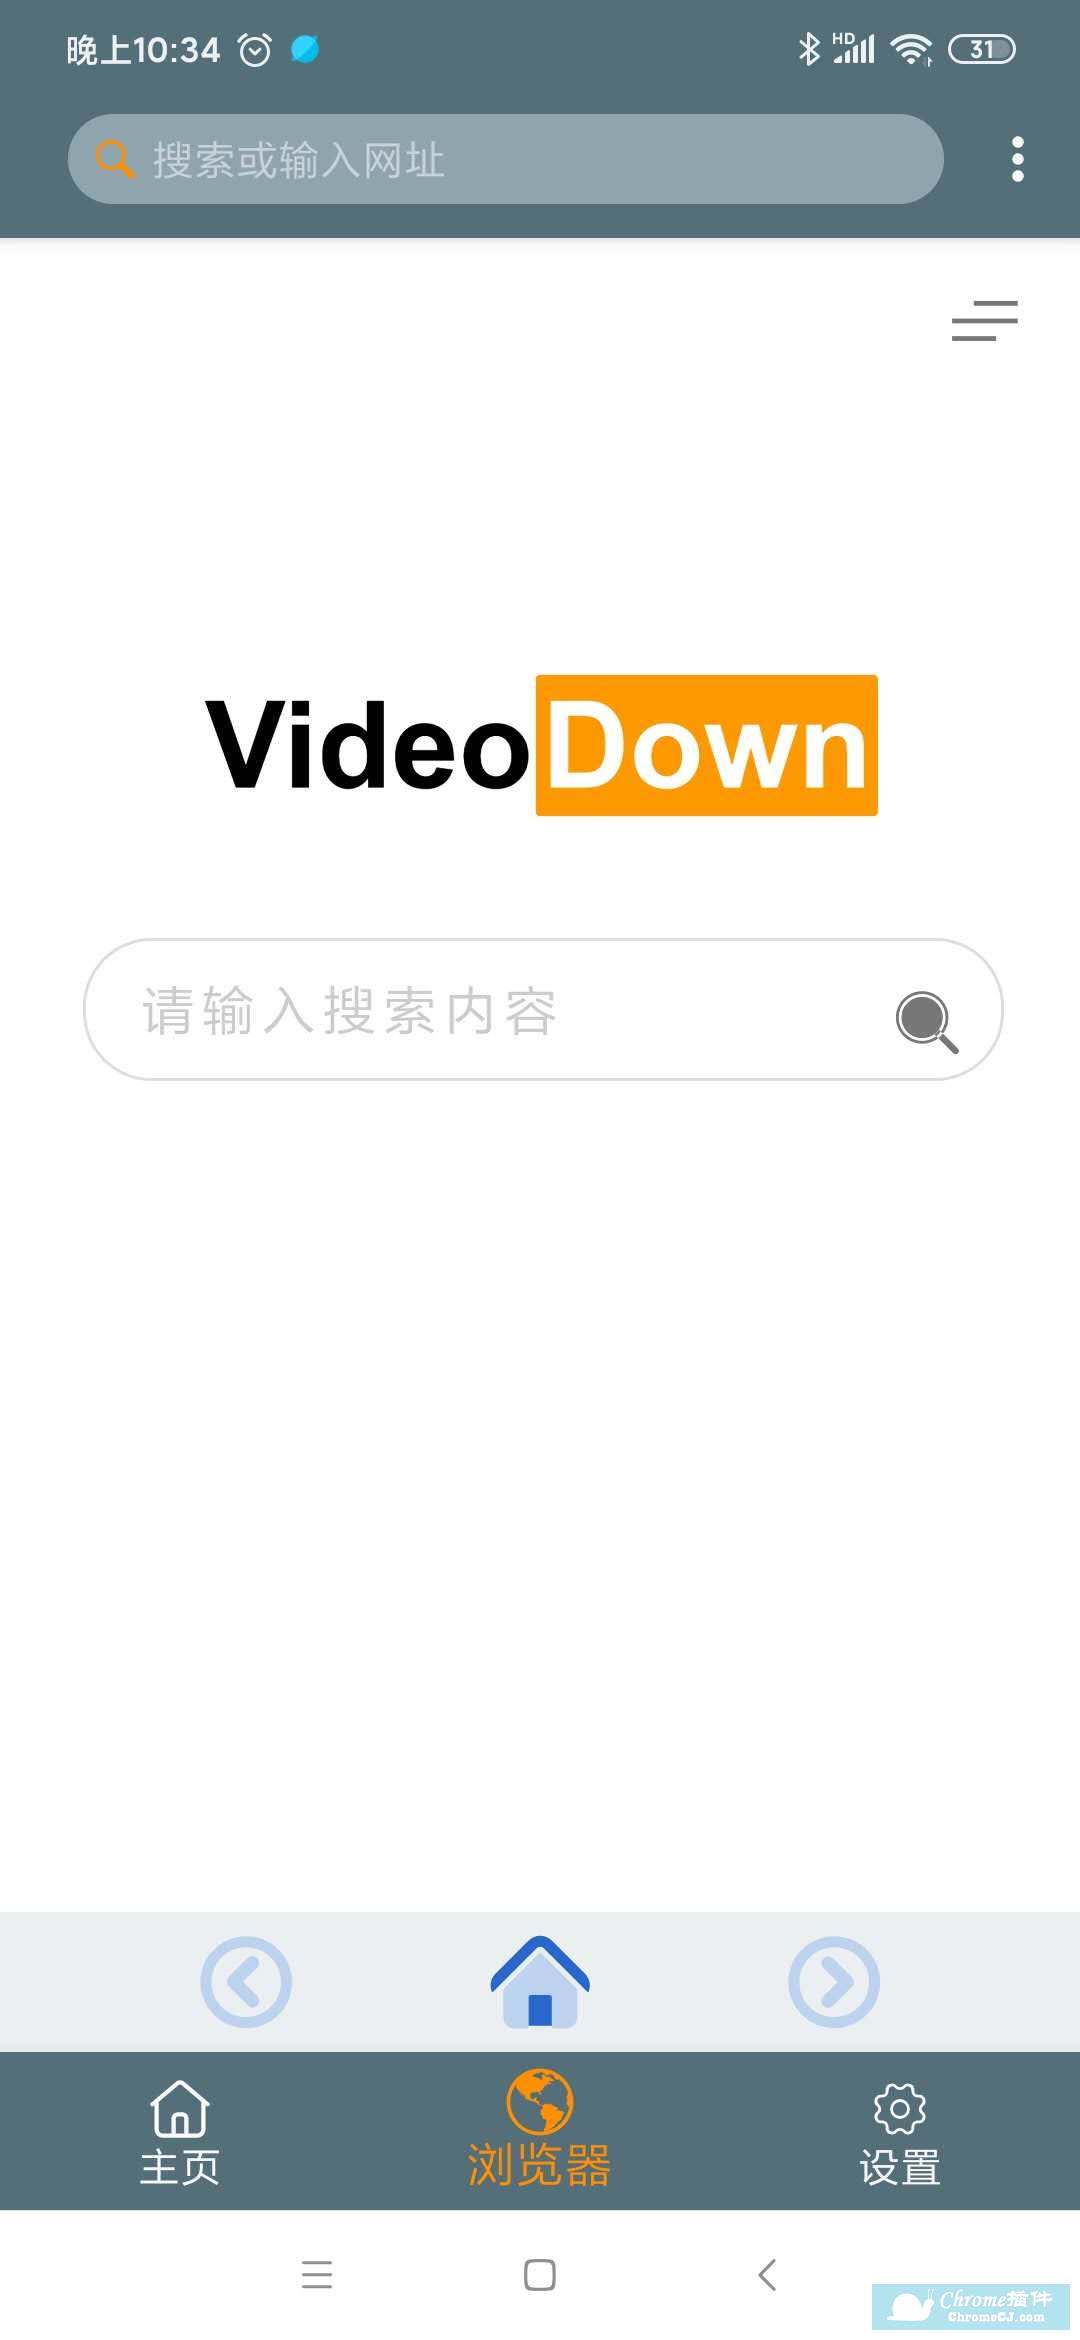 Video Down APP简介